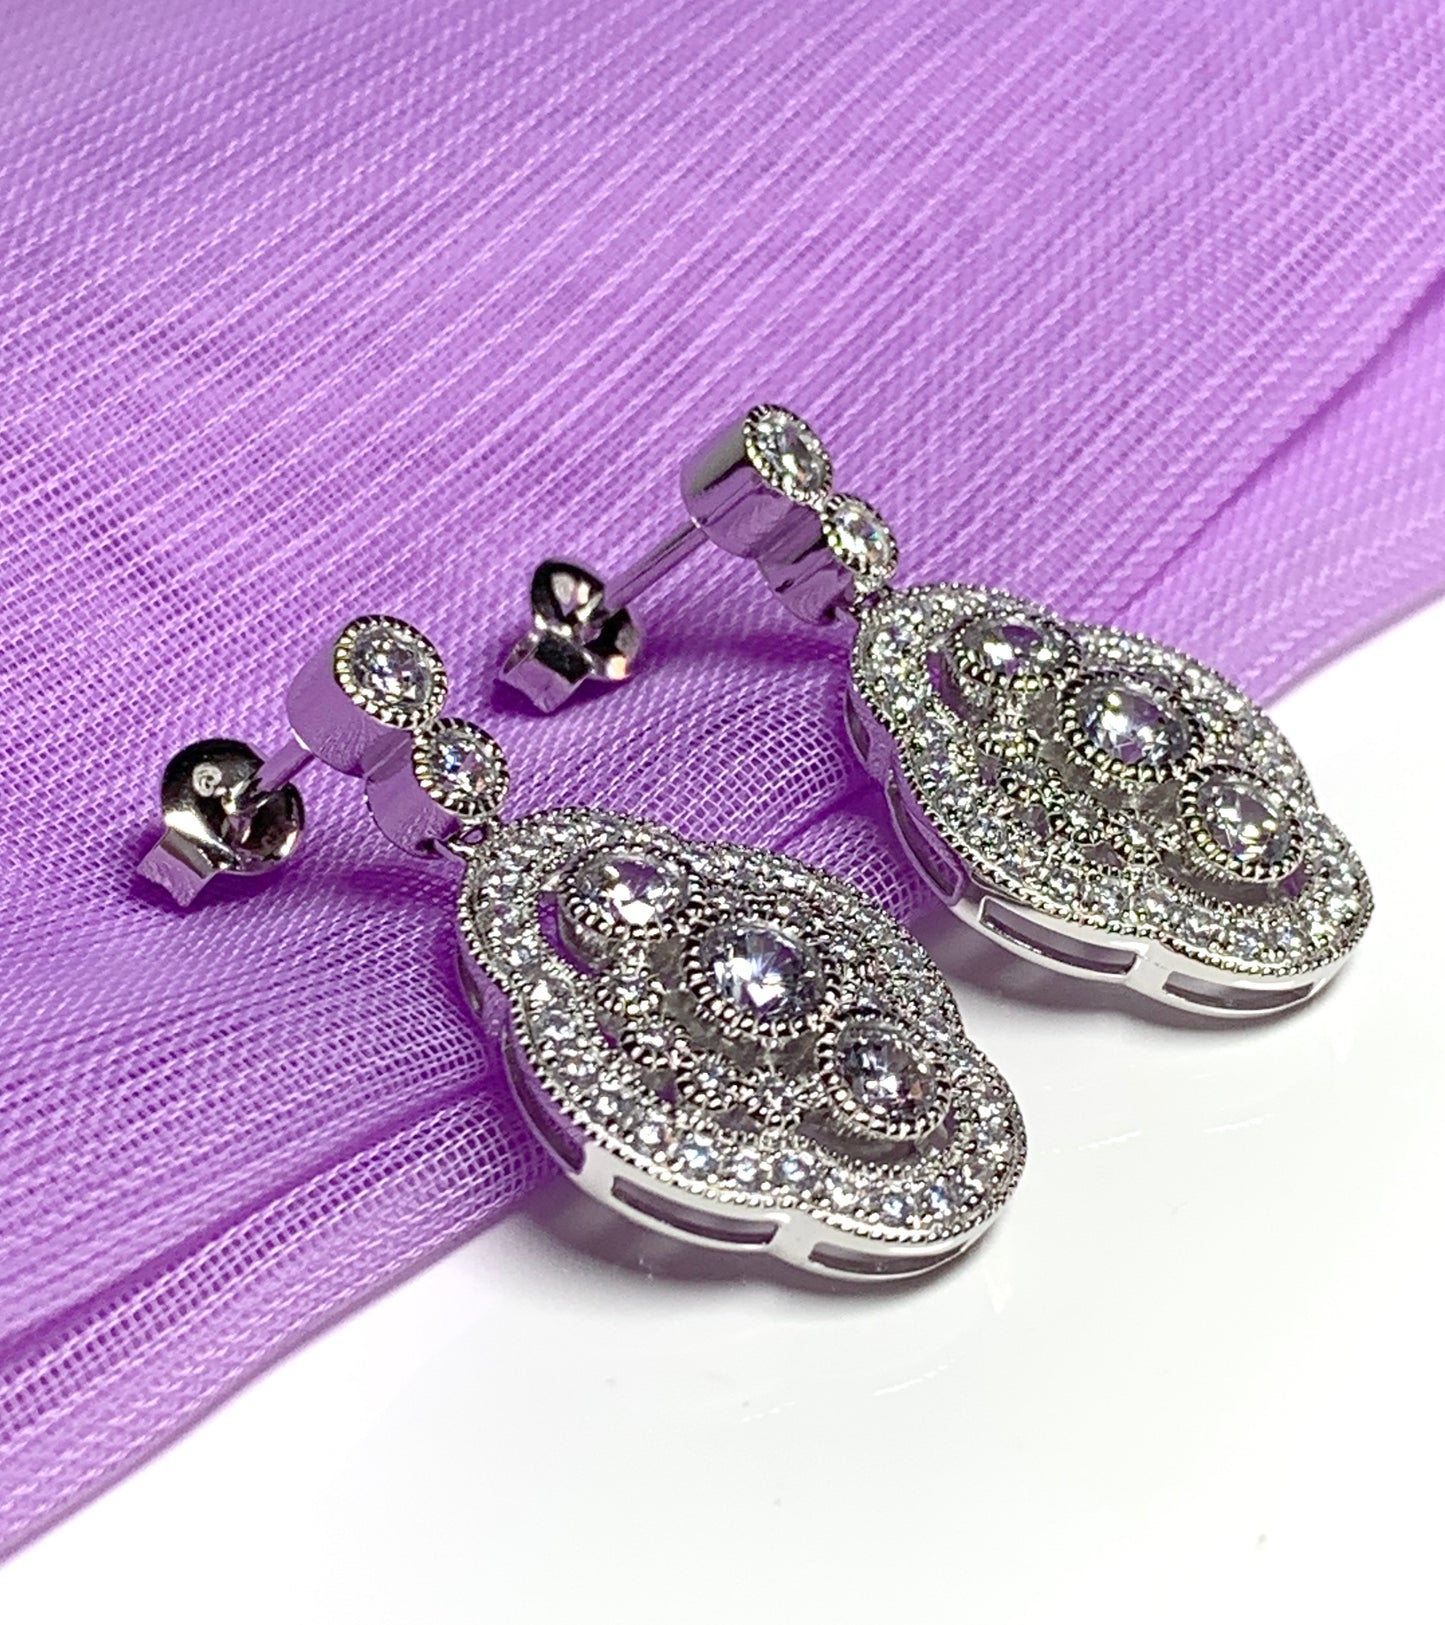 Sterling silver drop cluster earrings retro cubic zirconia